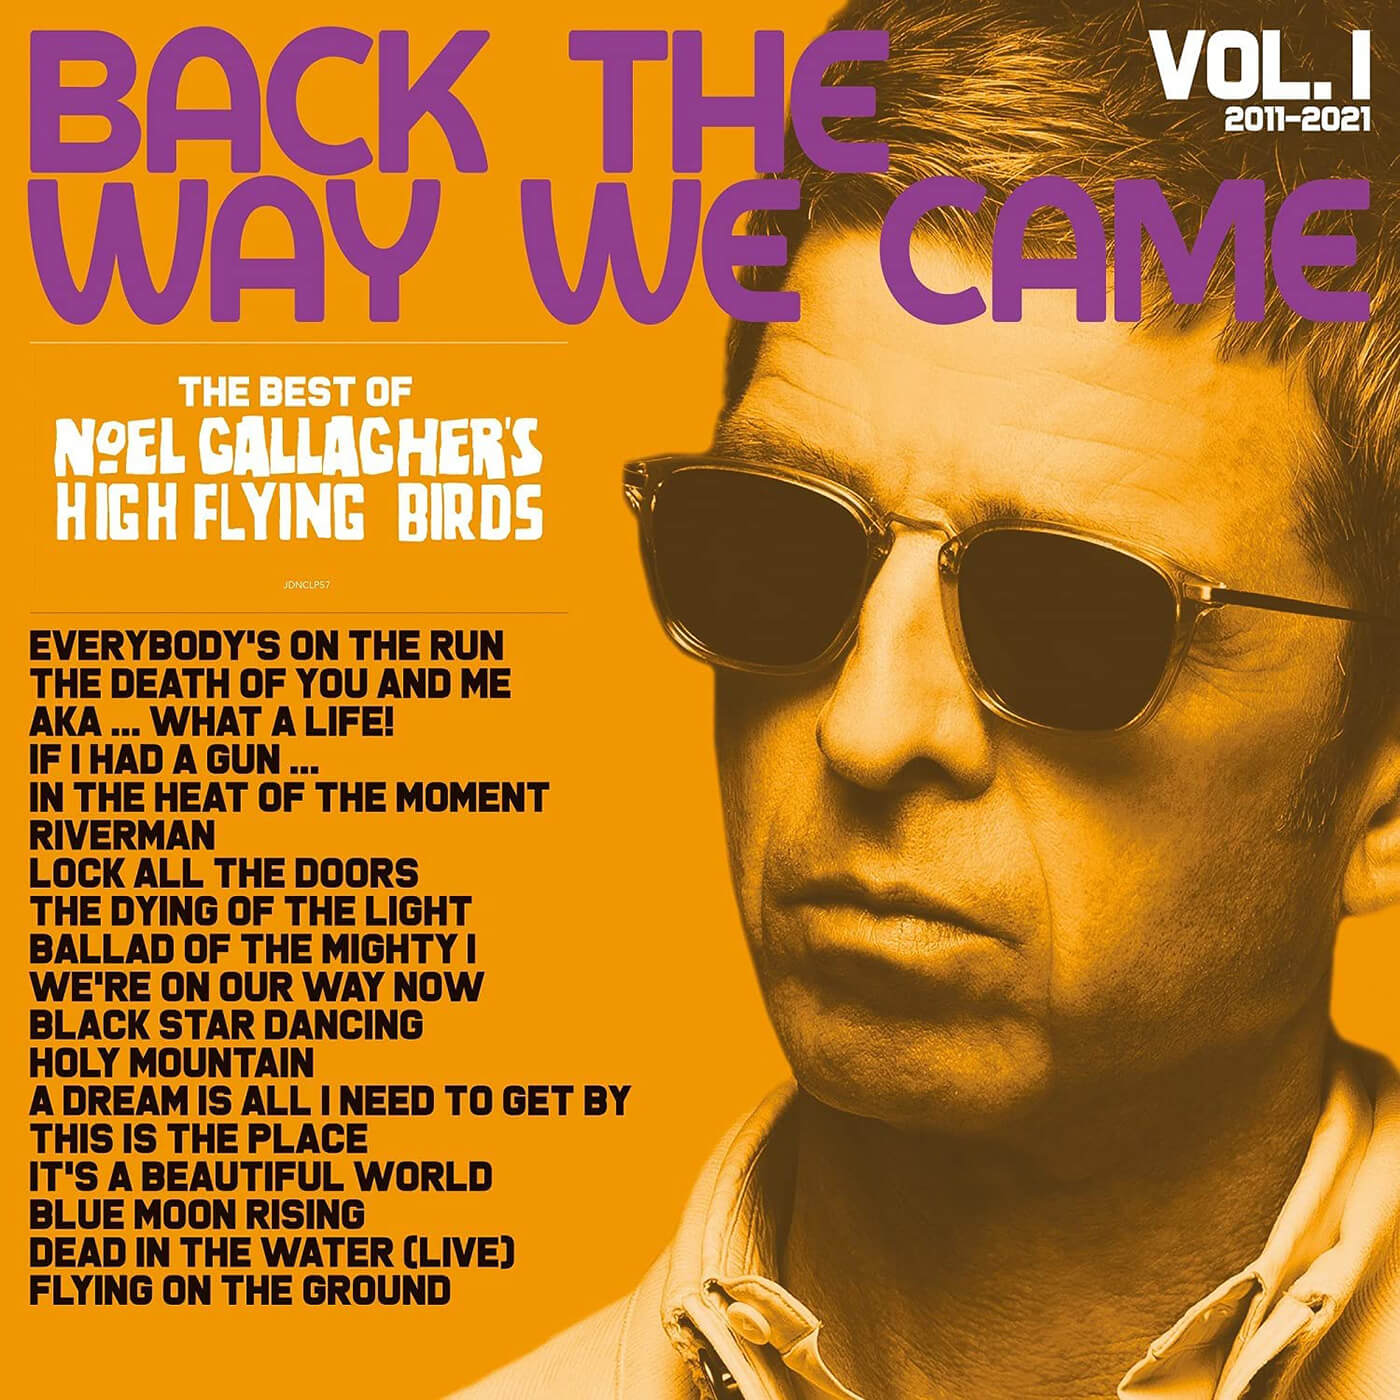 Noel Gallagher的高飞鸟 - 回到我们来的方式